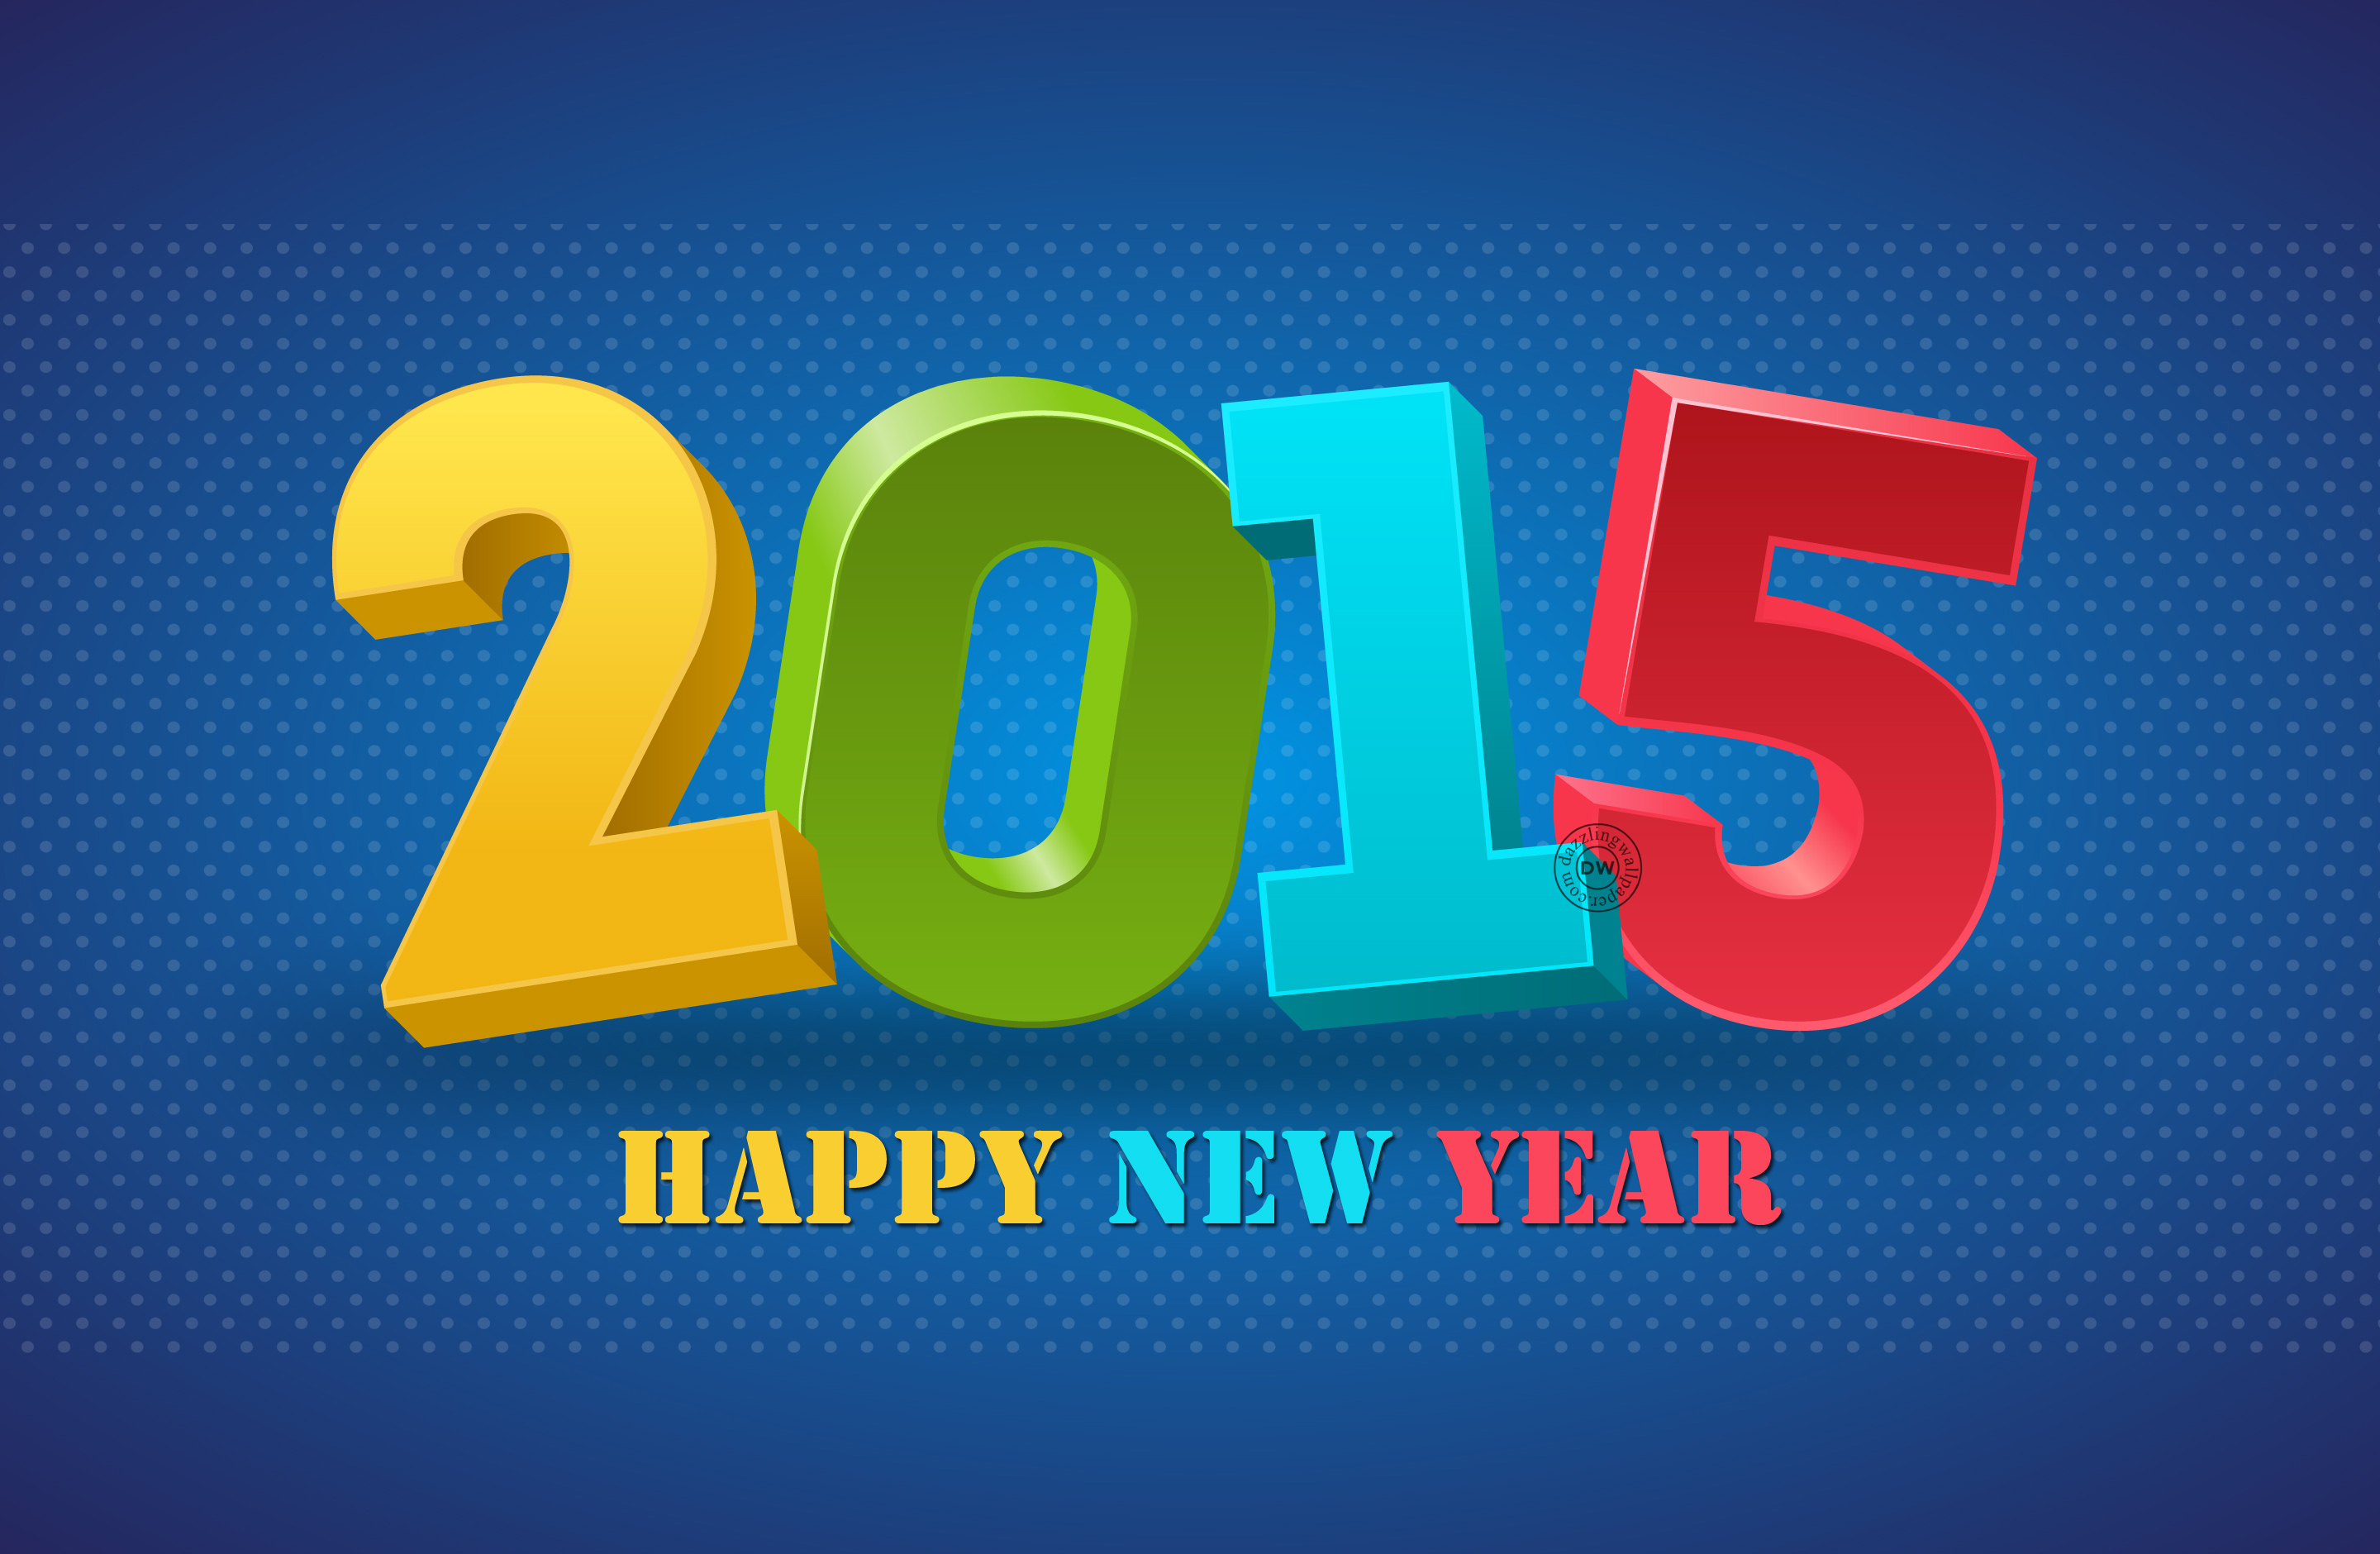 Very happy new year 2015 wallpaper